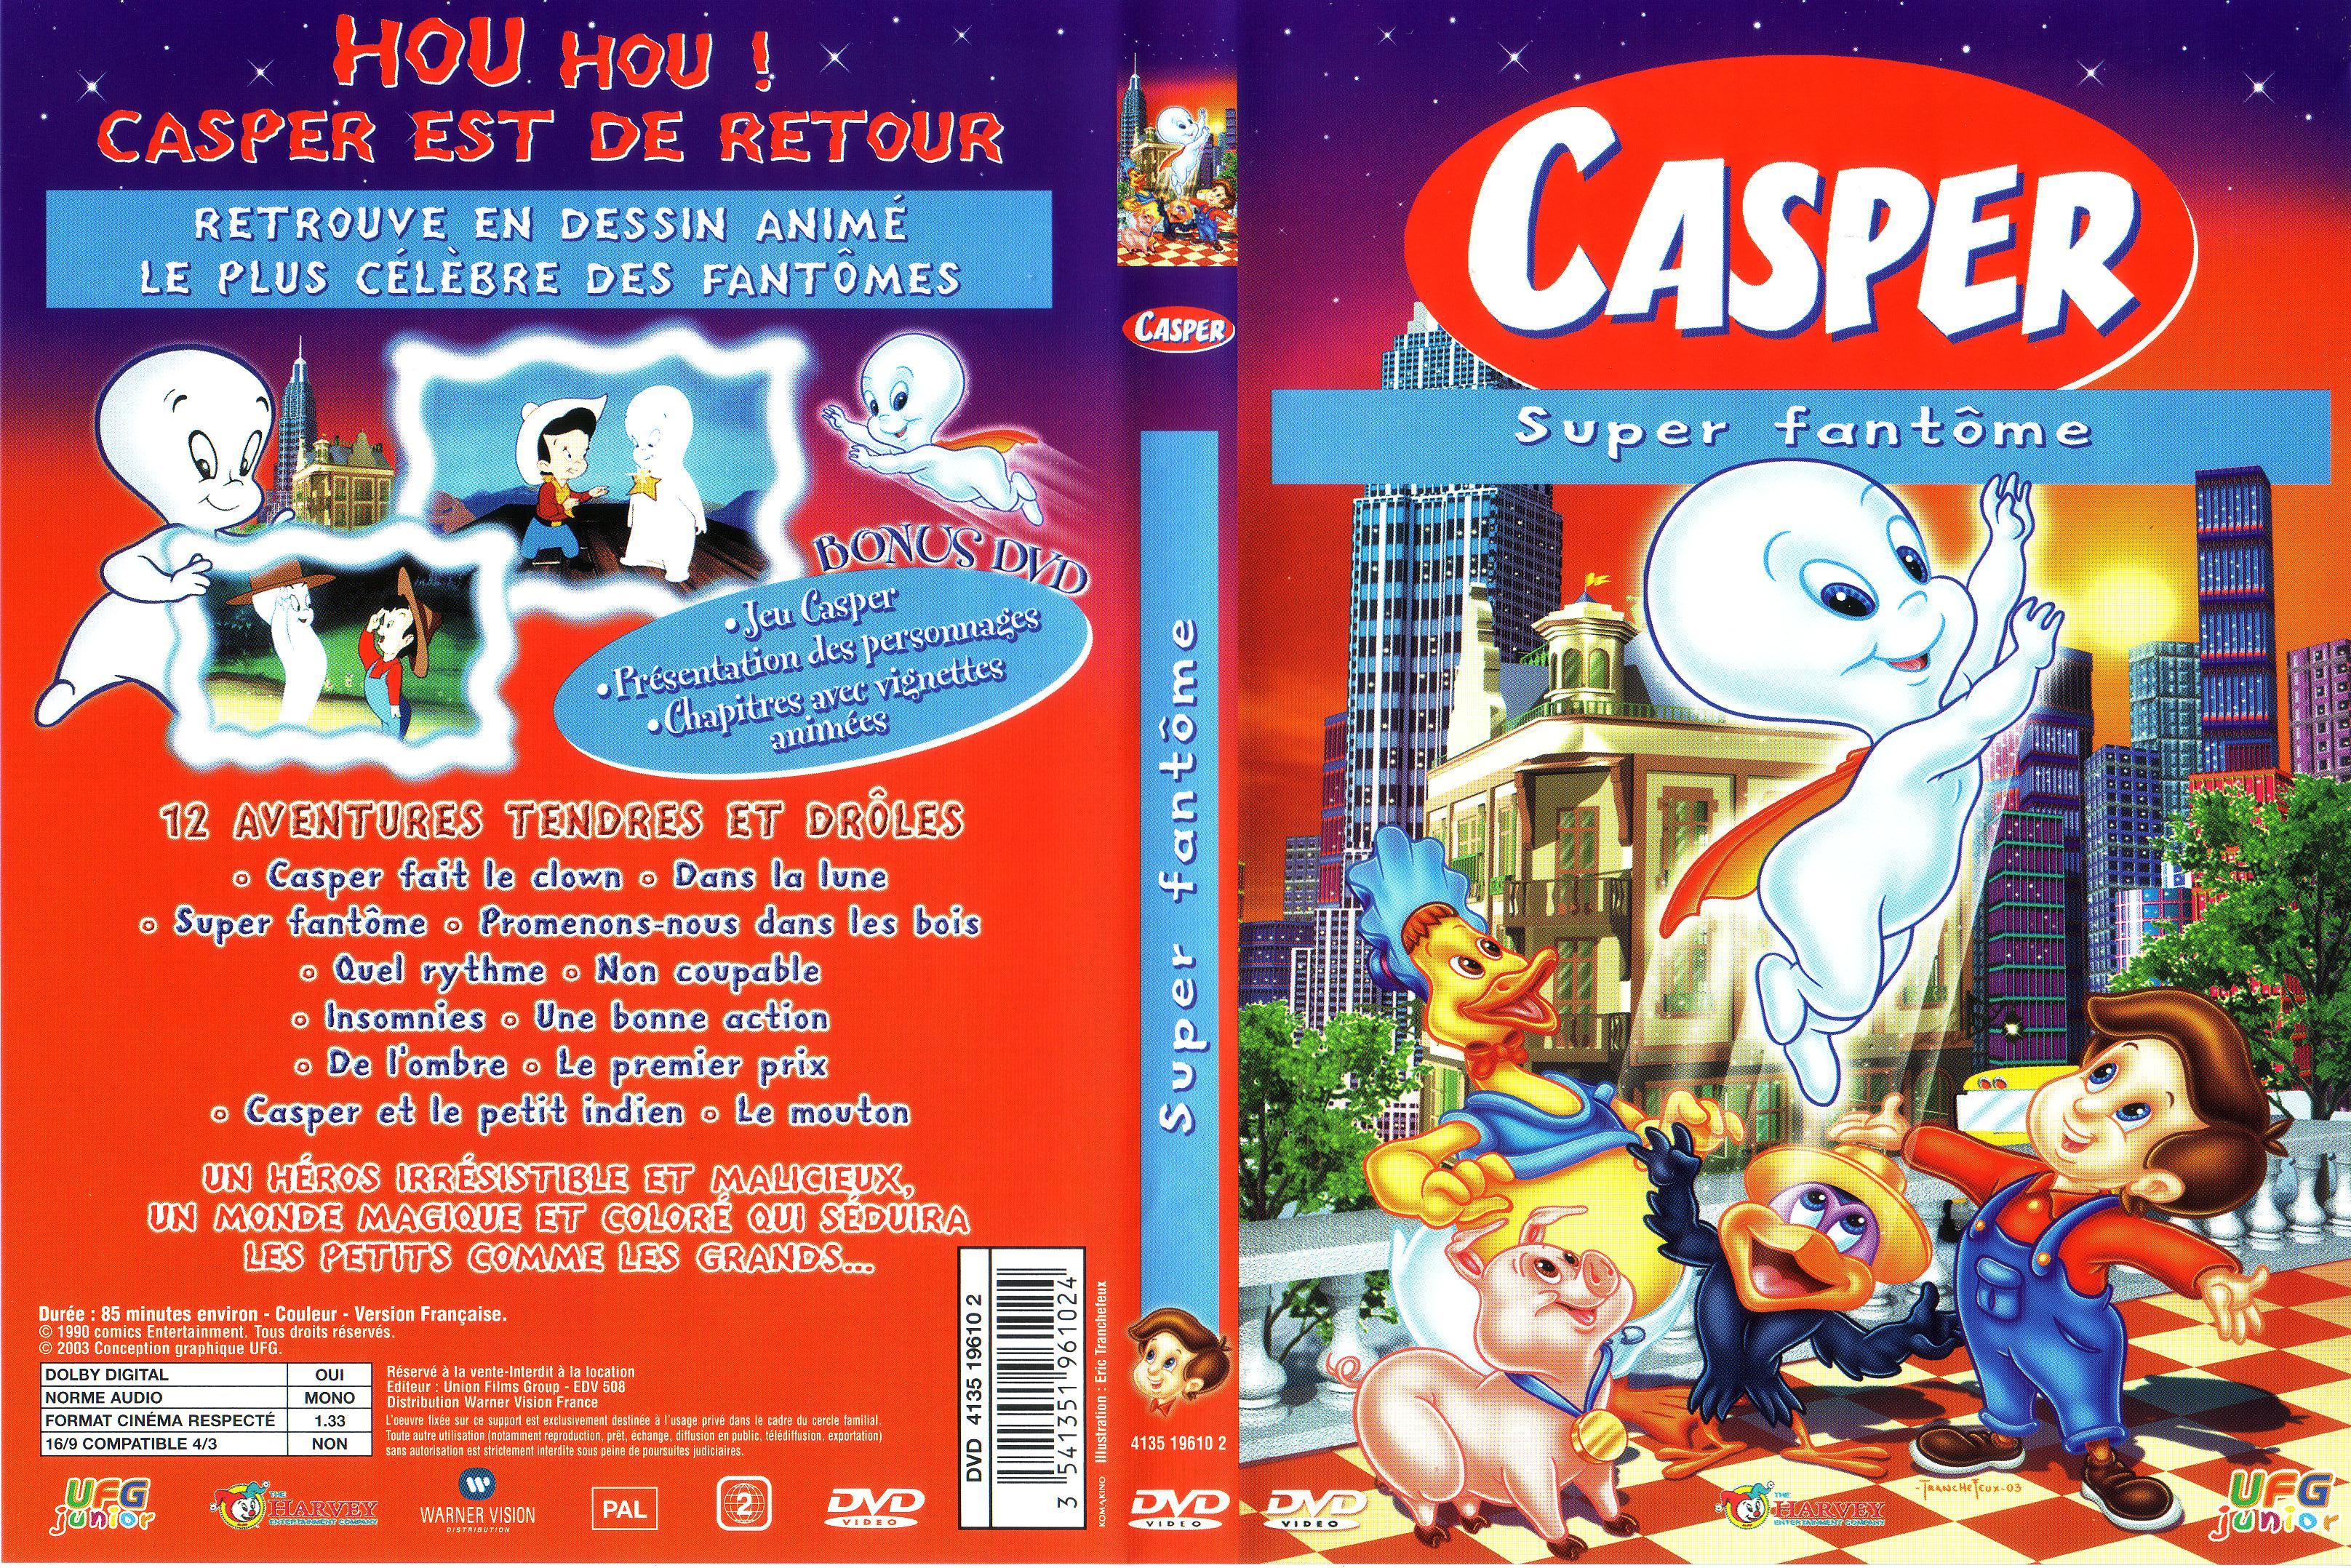 Jaquette DVD Casper super fantome